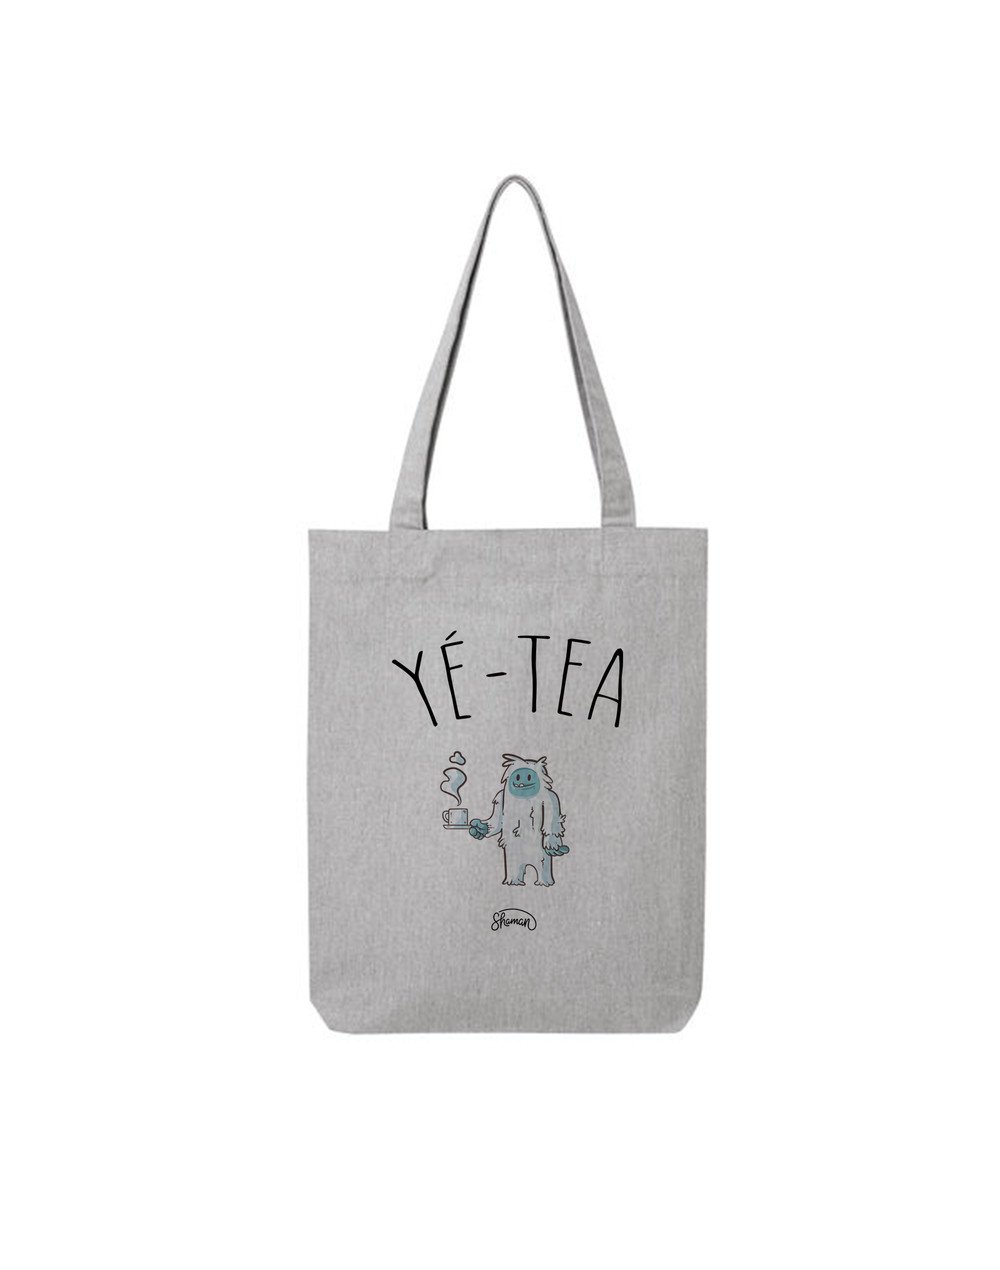 Tote Bag "Yé-tea"